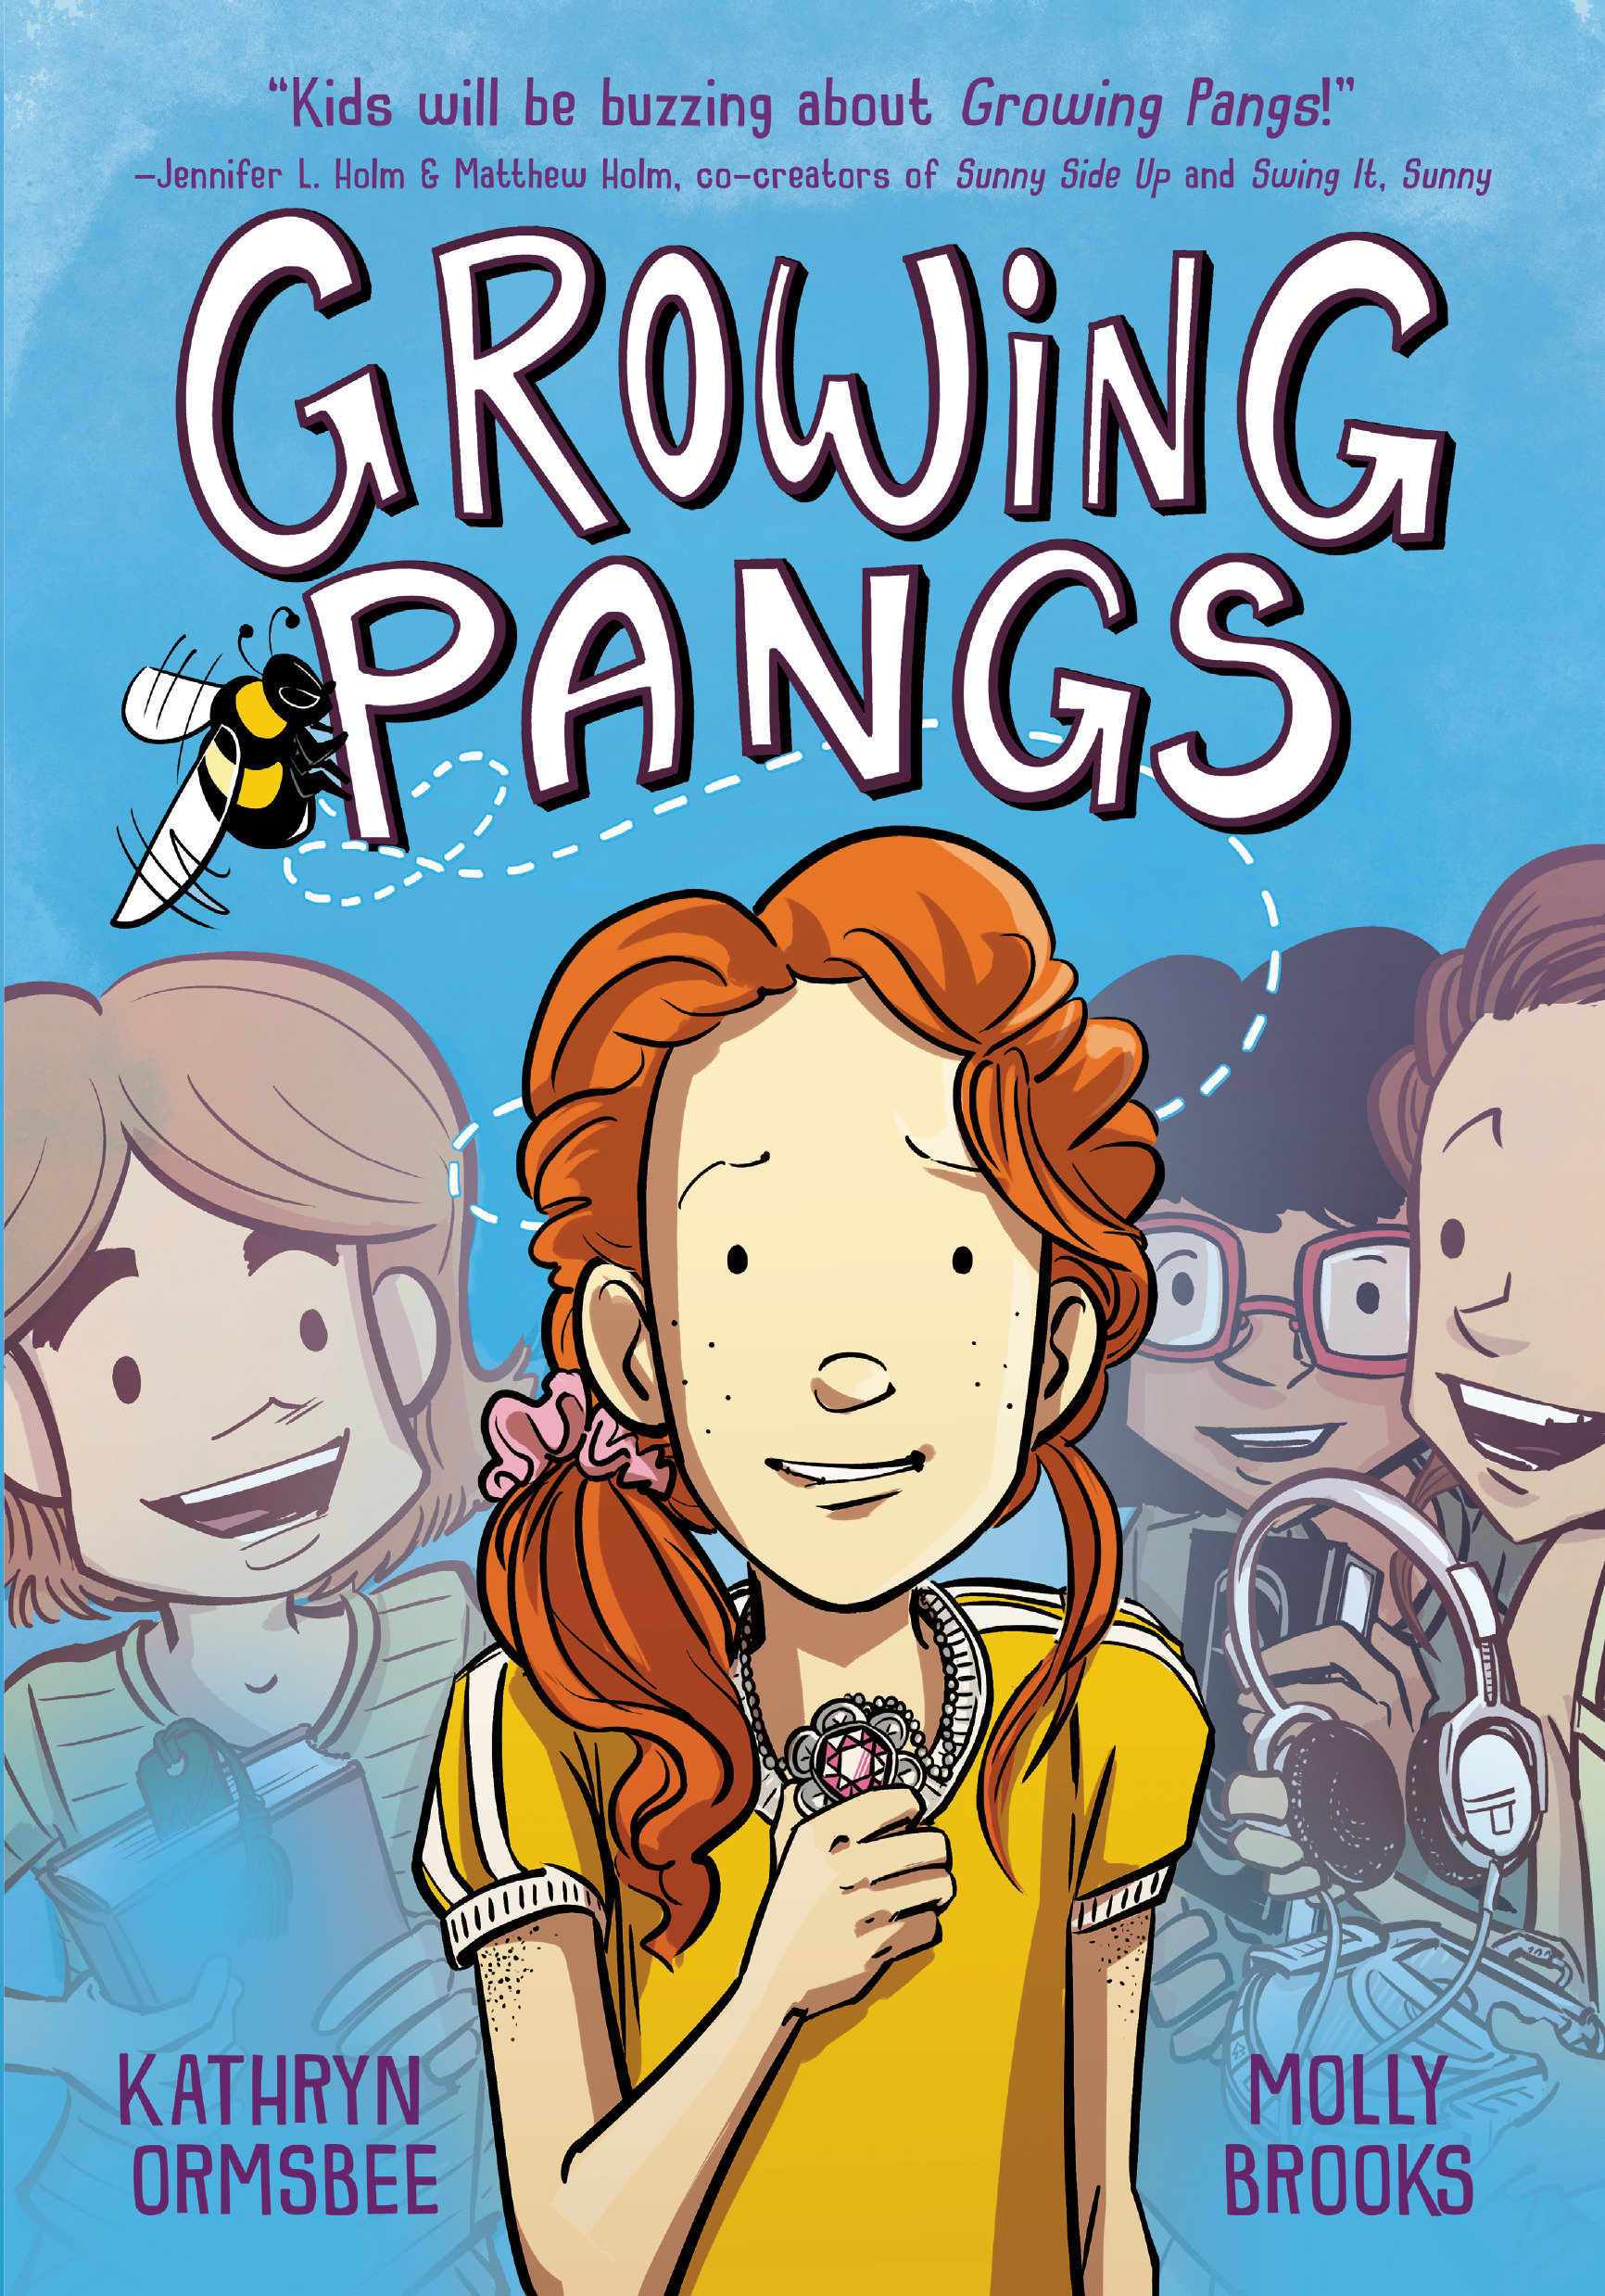 Growing Pangs Hardcover Graphic Novel